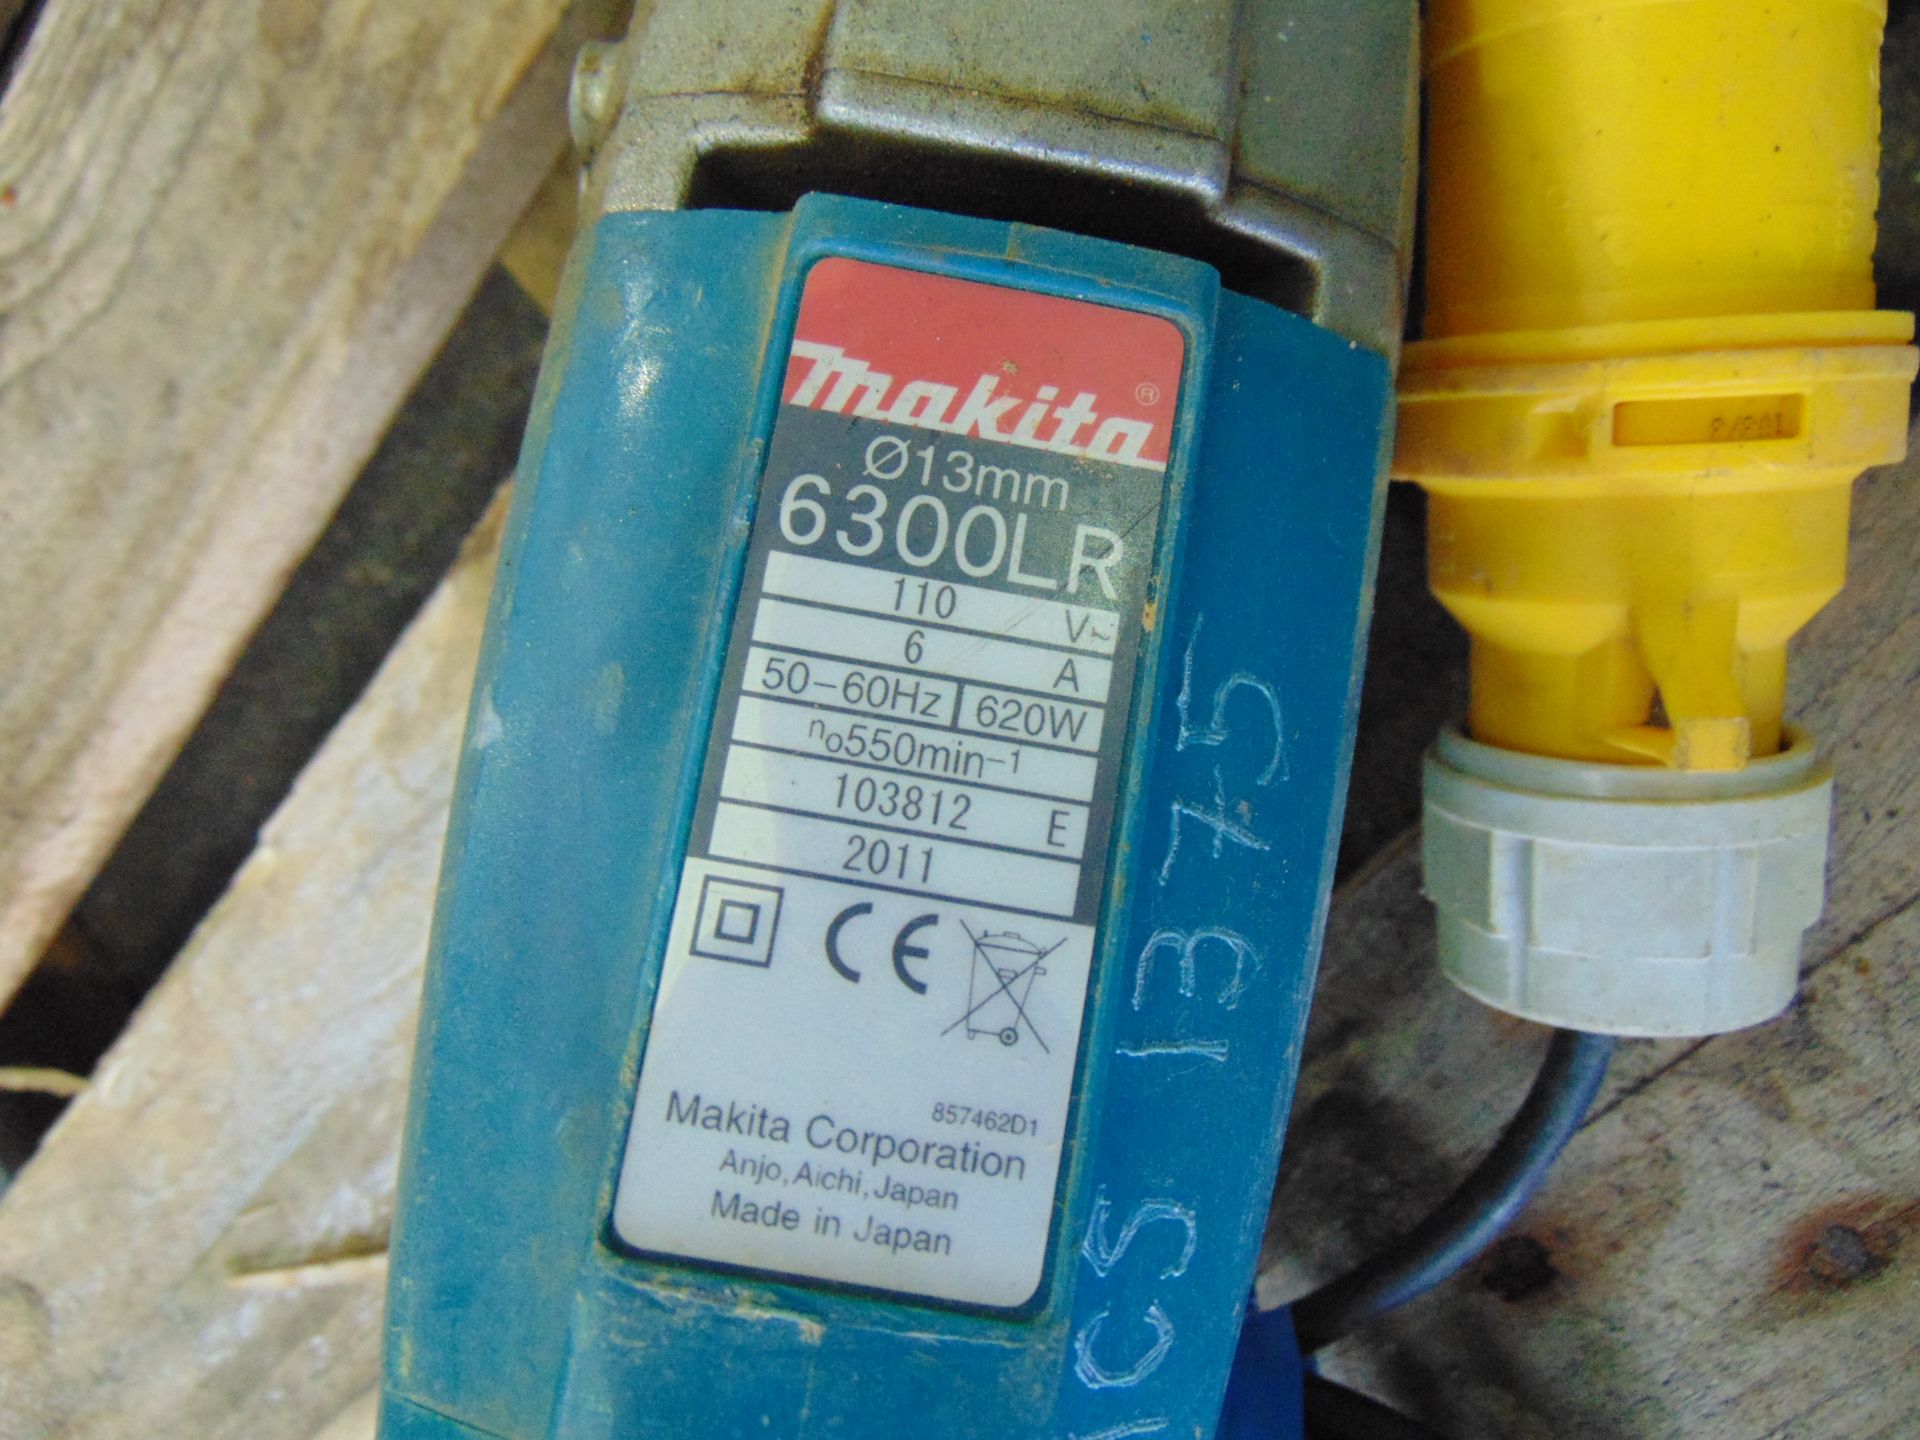 Makita 6300LR Angle Drill 110V - Image 4 of 5